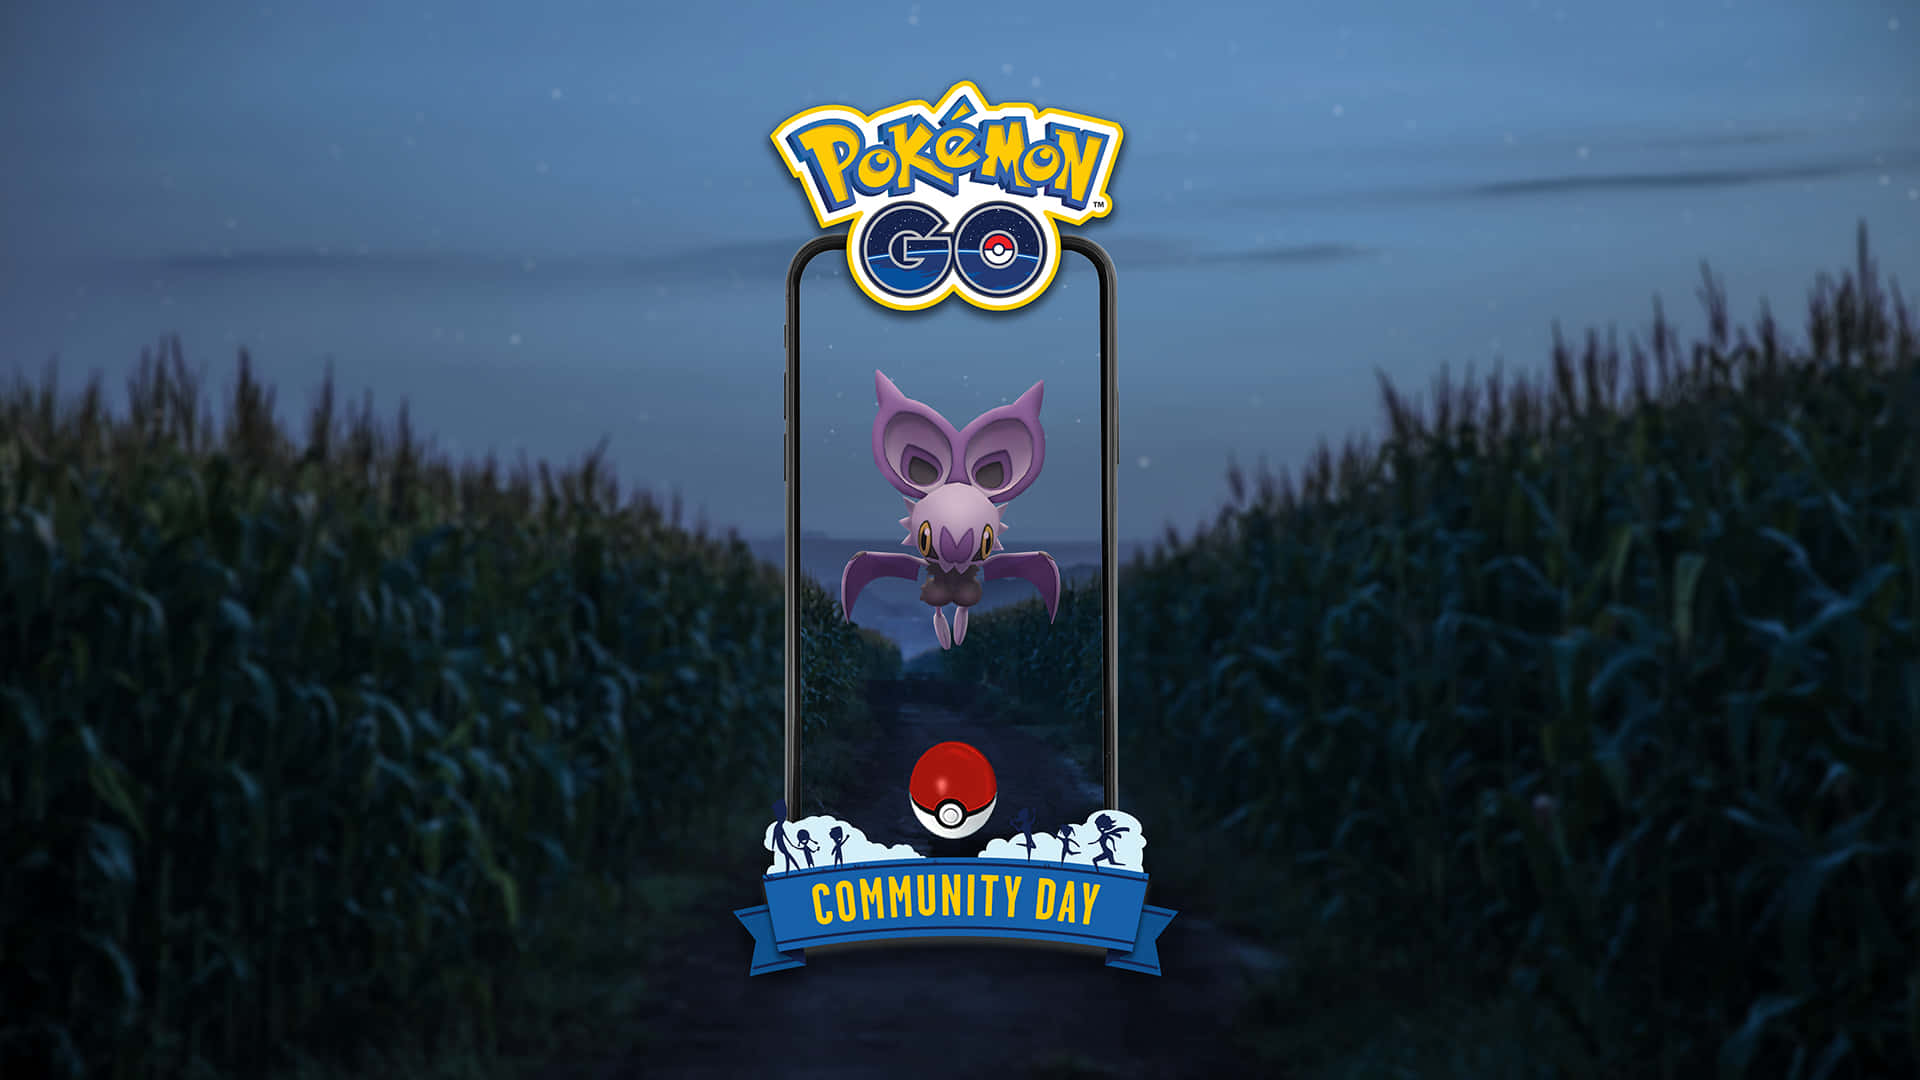 Noibatbeim Pokémon Go Community Day Wallpaper